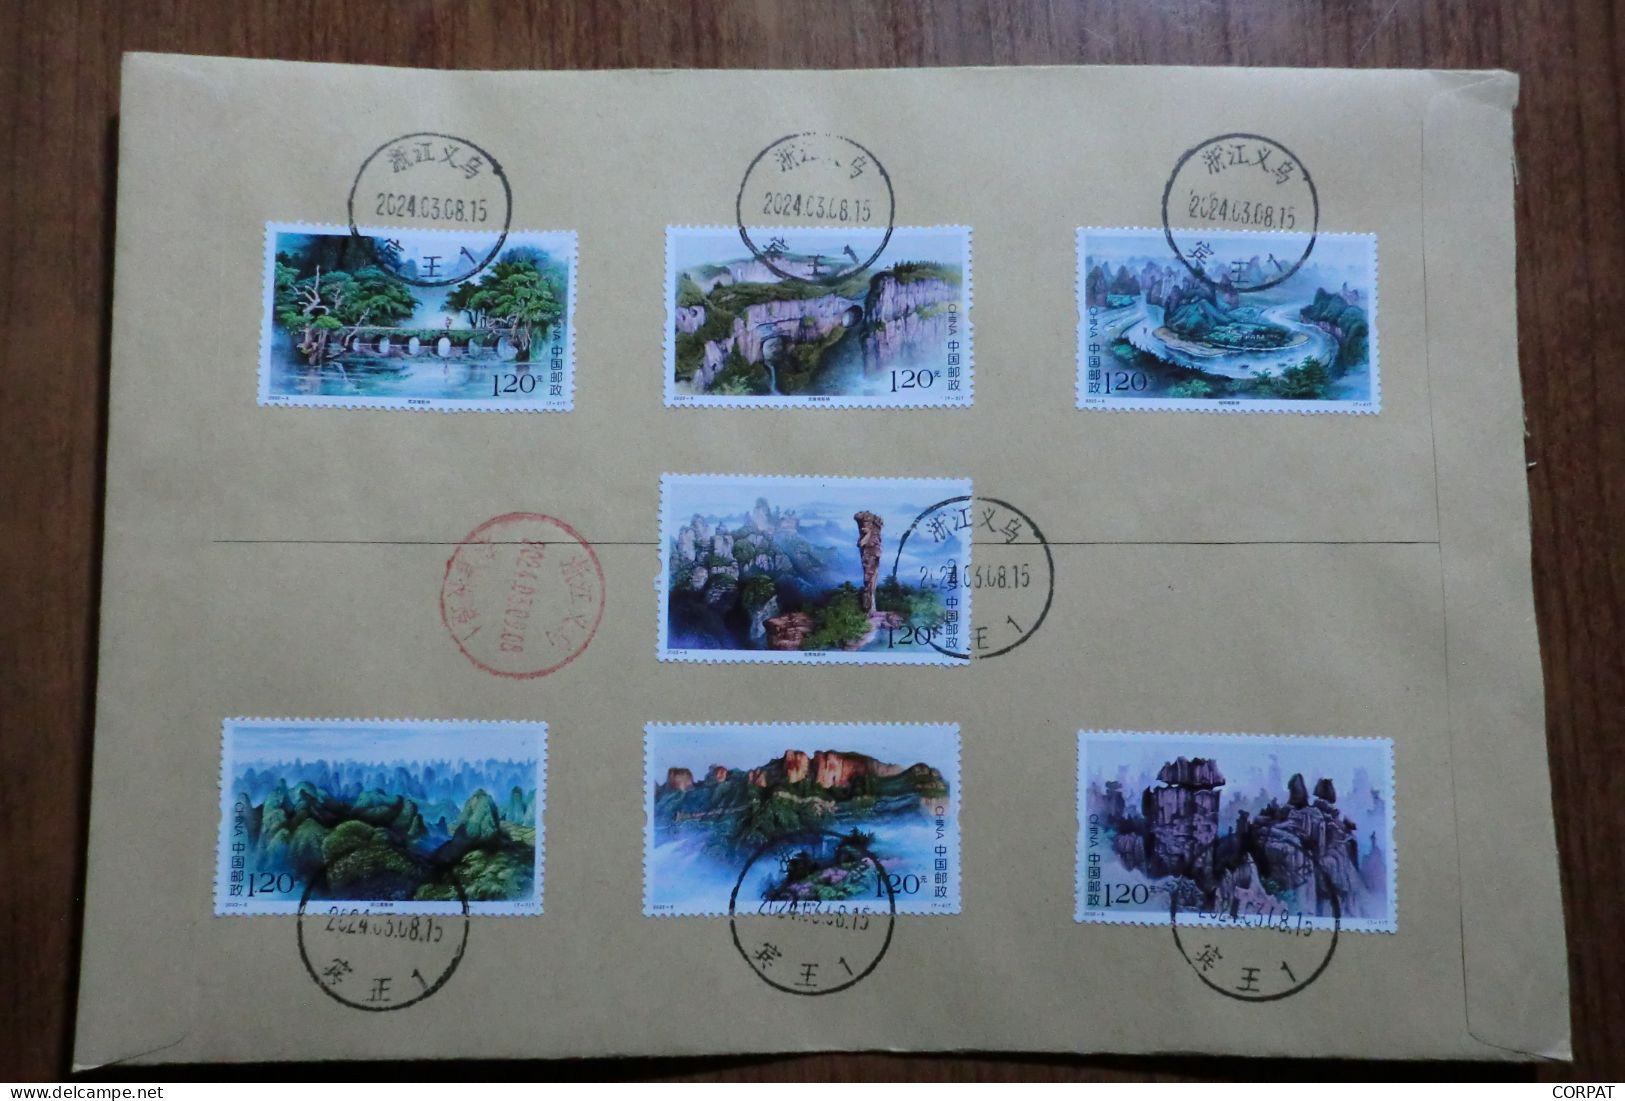 China. Full Set  On Registered Envelope - Covers & Documents